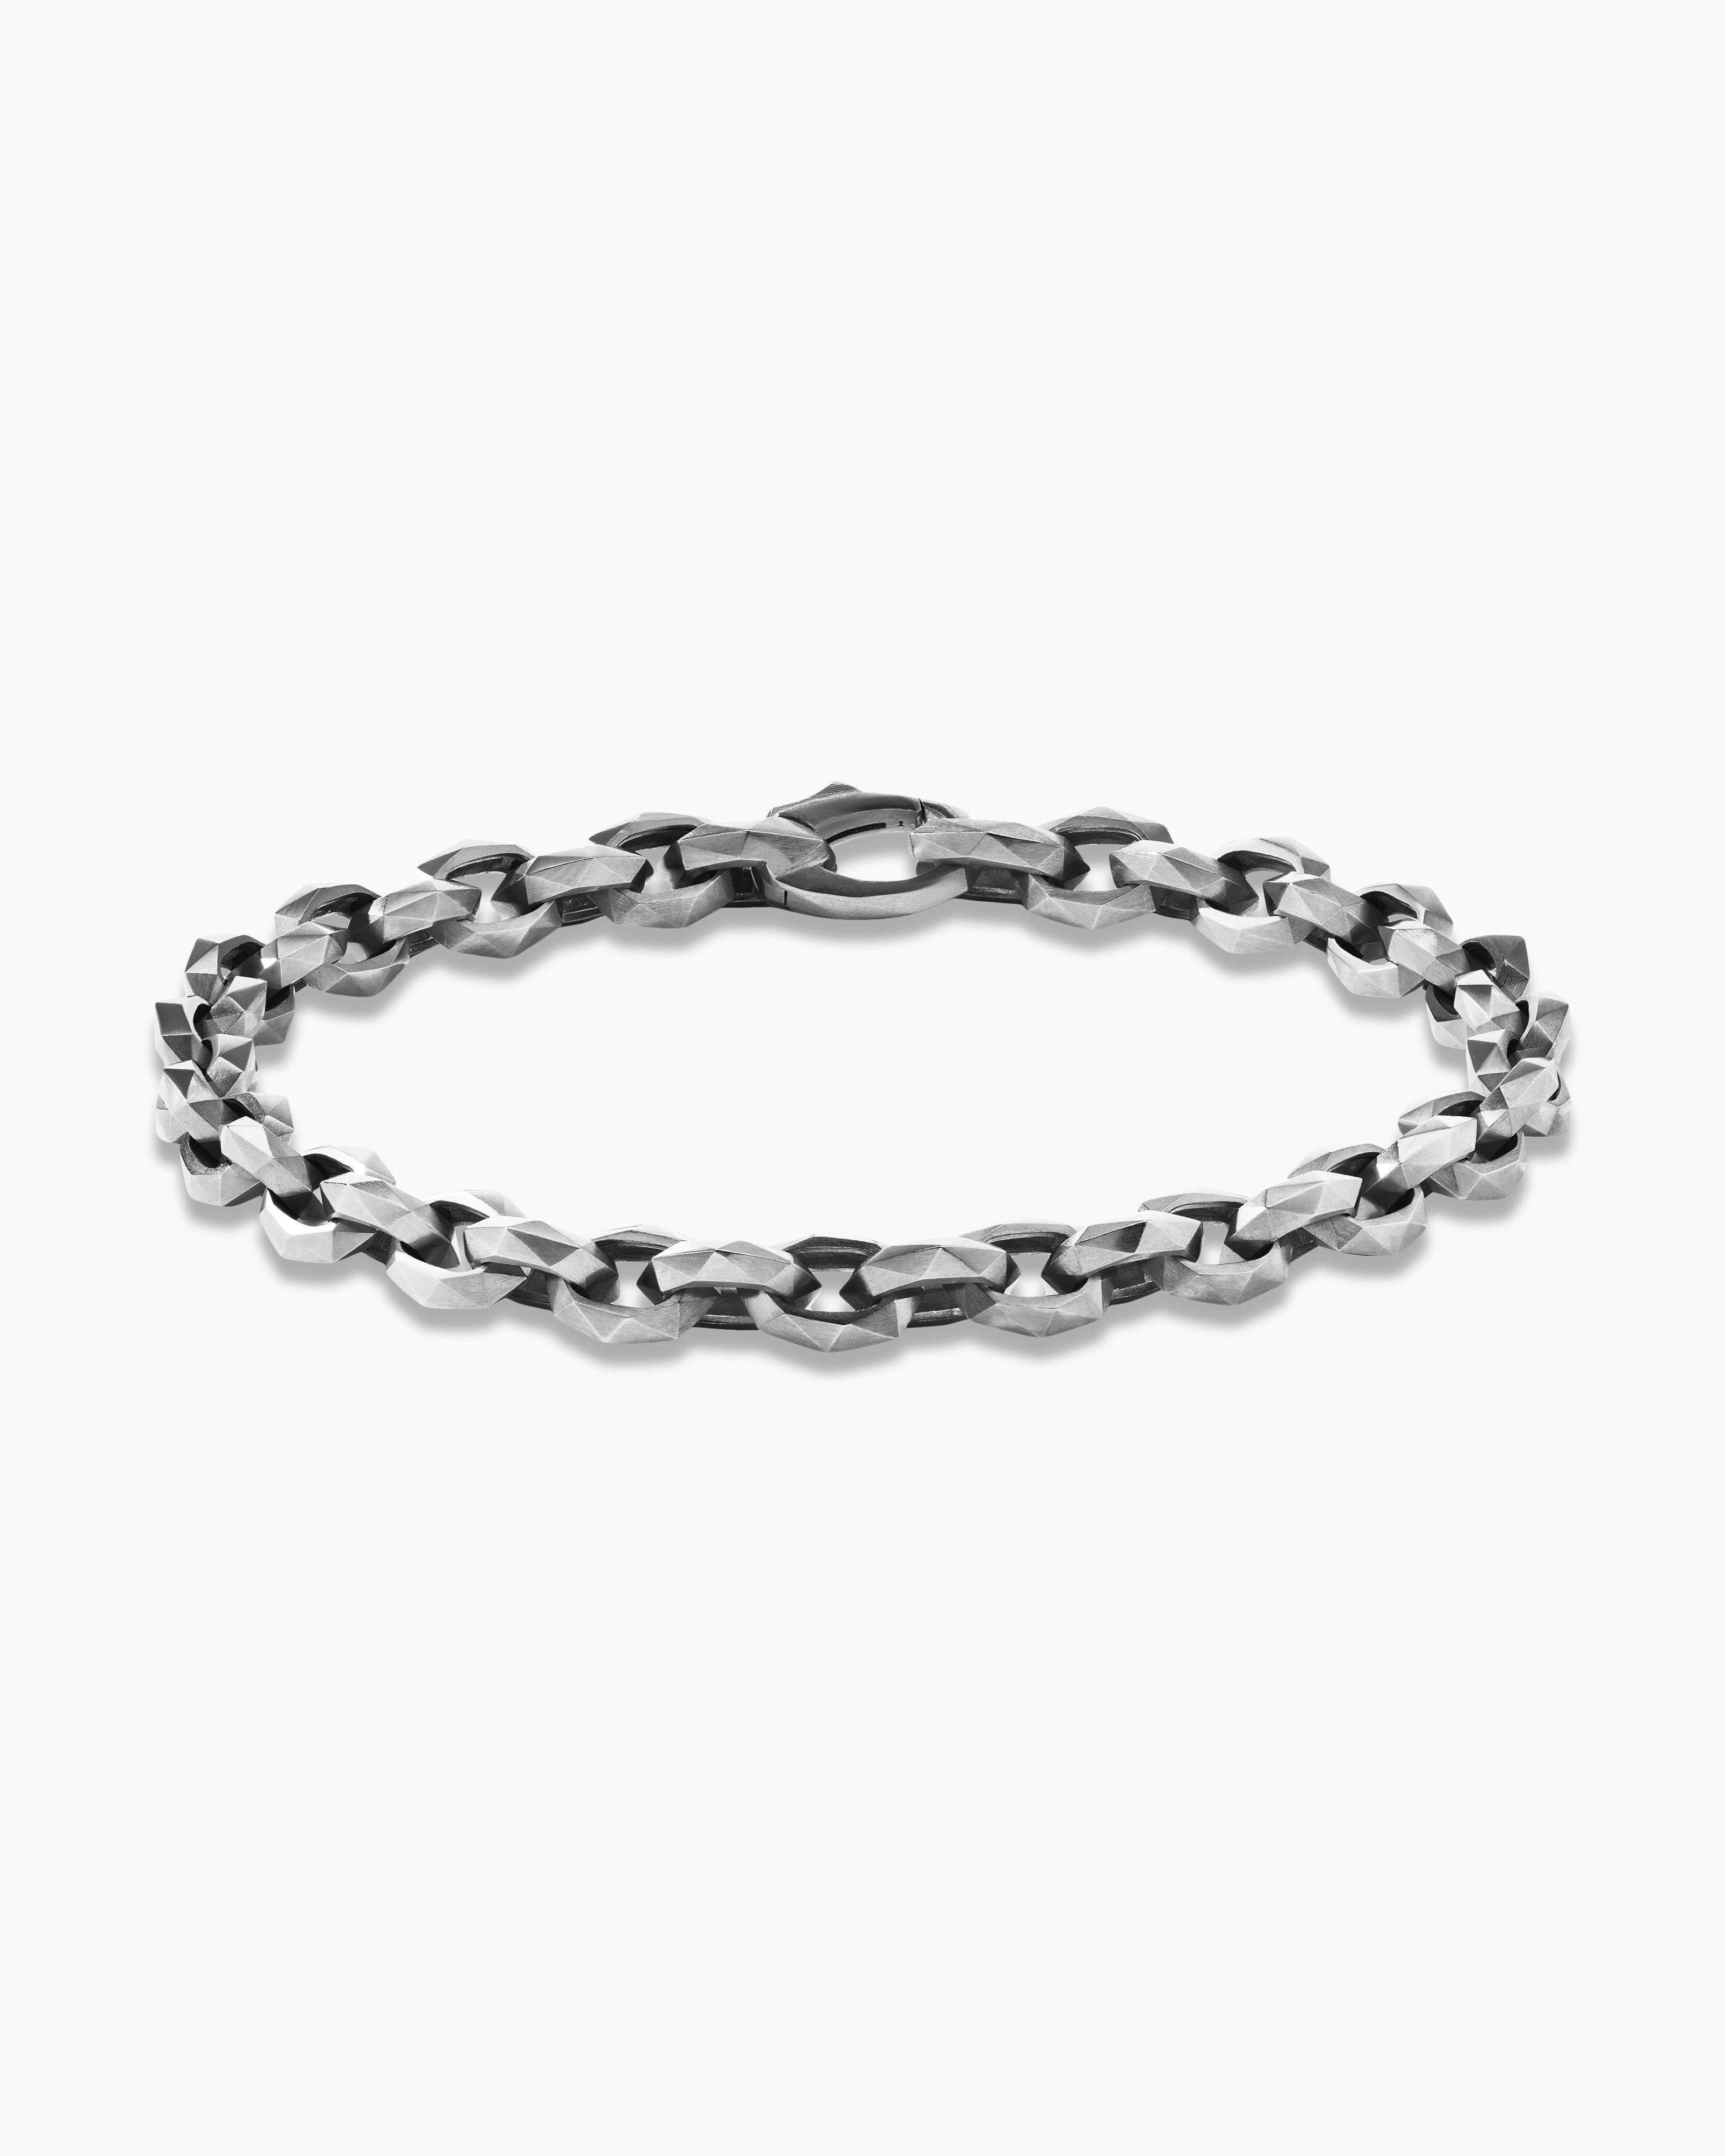 Mens Torqued Faceted Chain Link Bracelet in Sterling Silver, 7mm